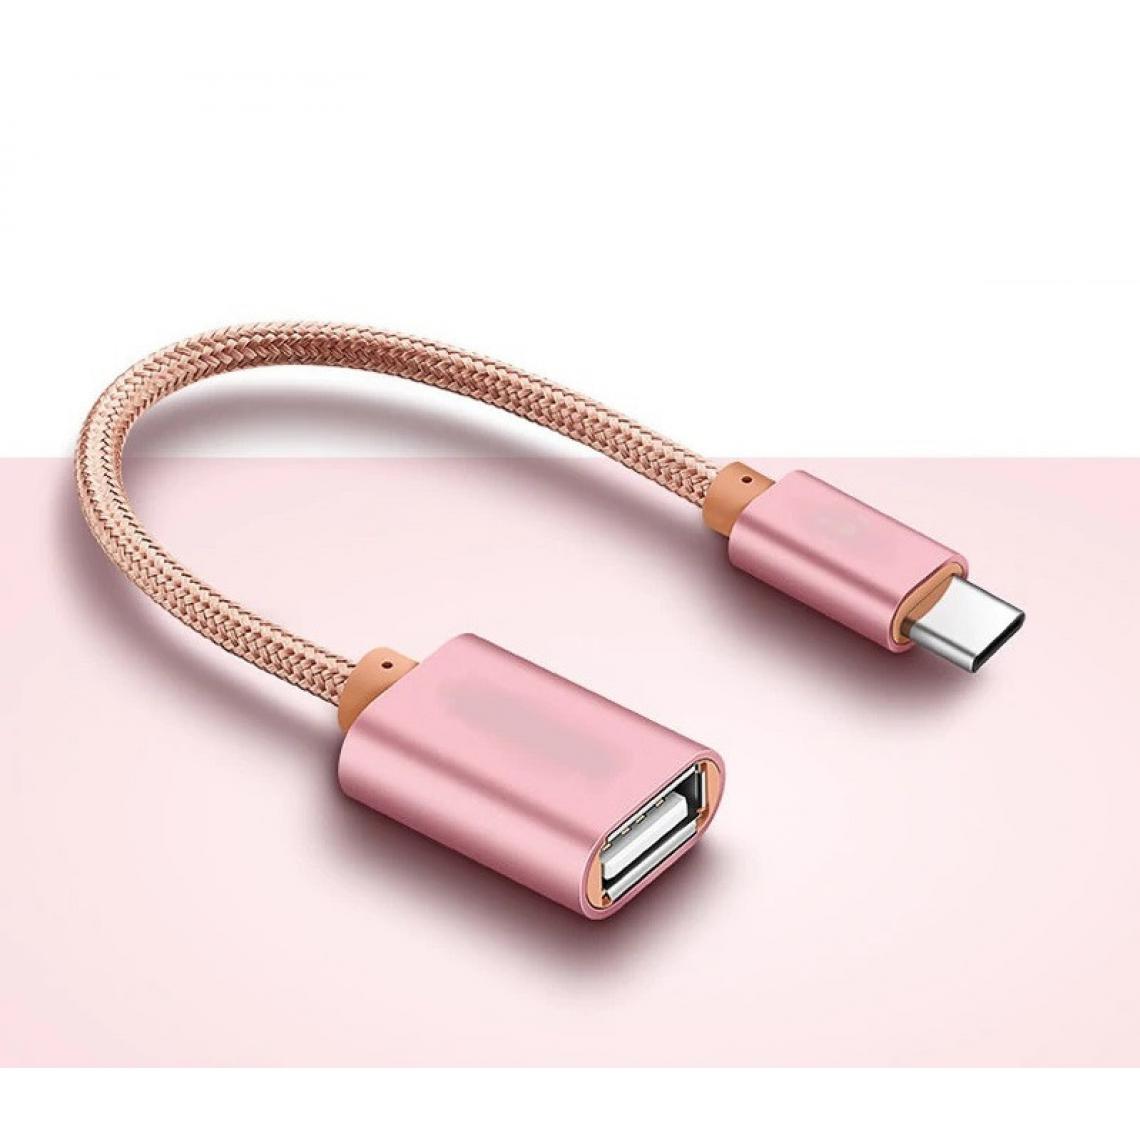 Shot - Adaptateur Type C/USB pour SAMSUNG Galaxy Tab S6 Lite Smartphone & MAC USB-C Clef (ROSE) - Autres accessoires smartphone